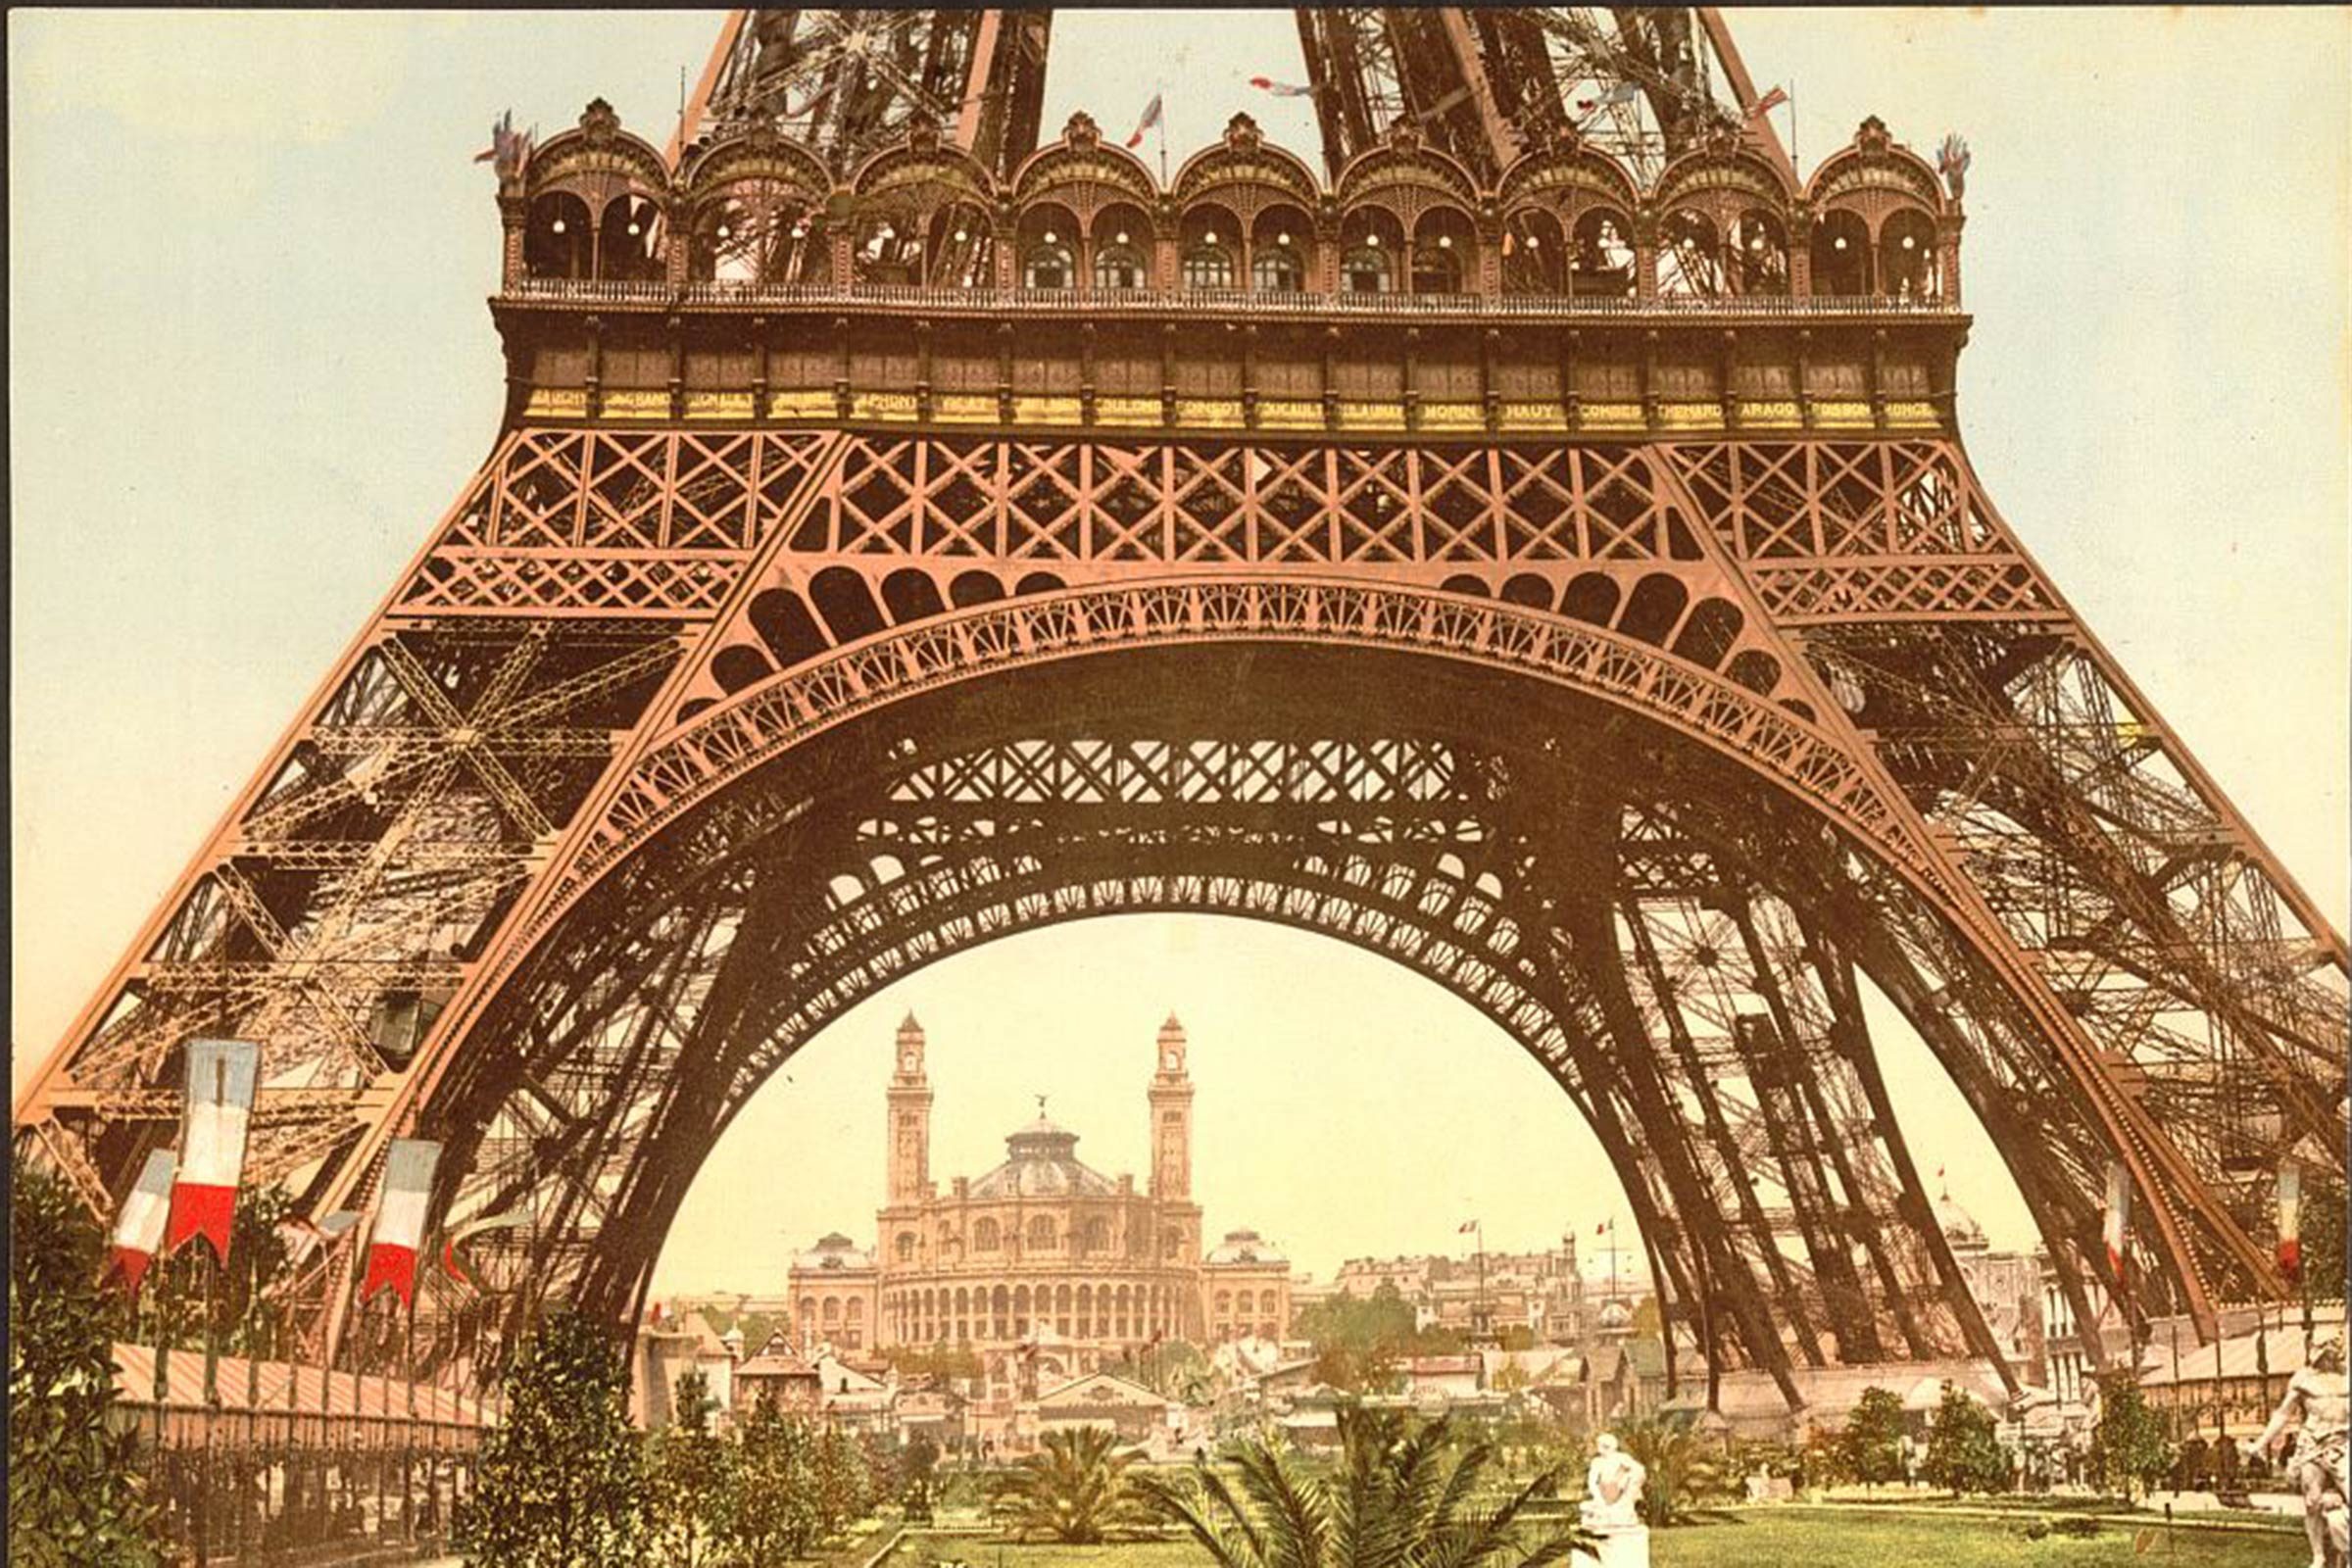 The Eiffel Tower: facts, history, construction, secrets - We Build Value